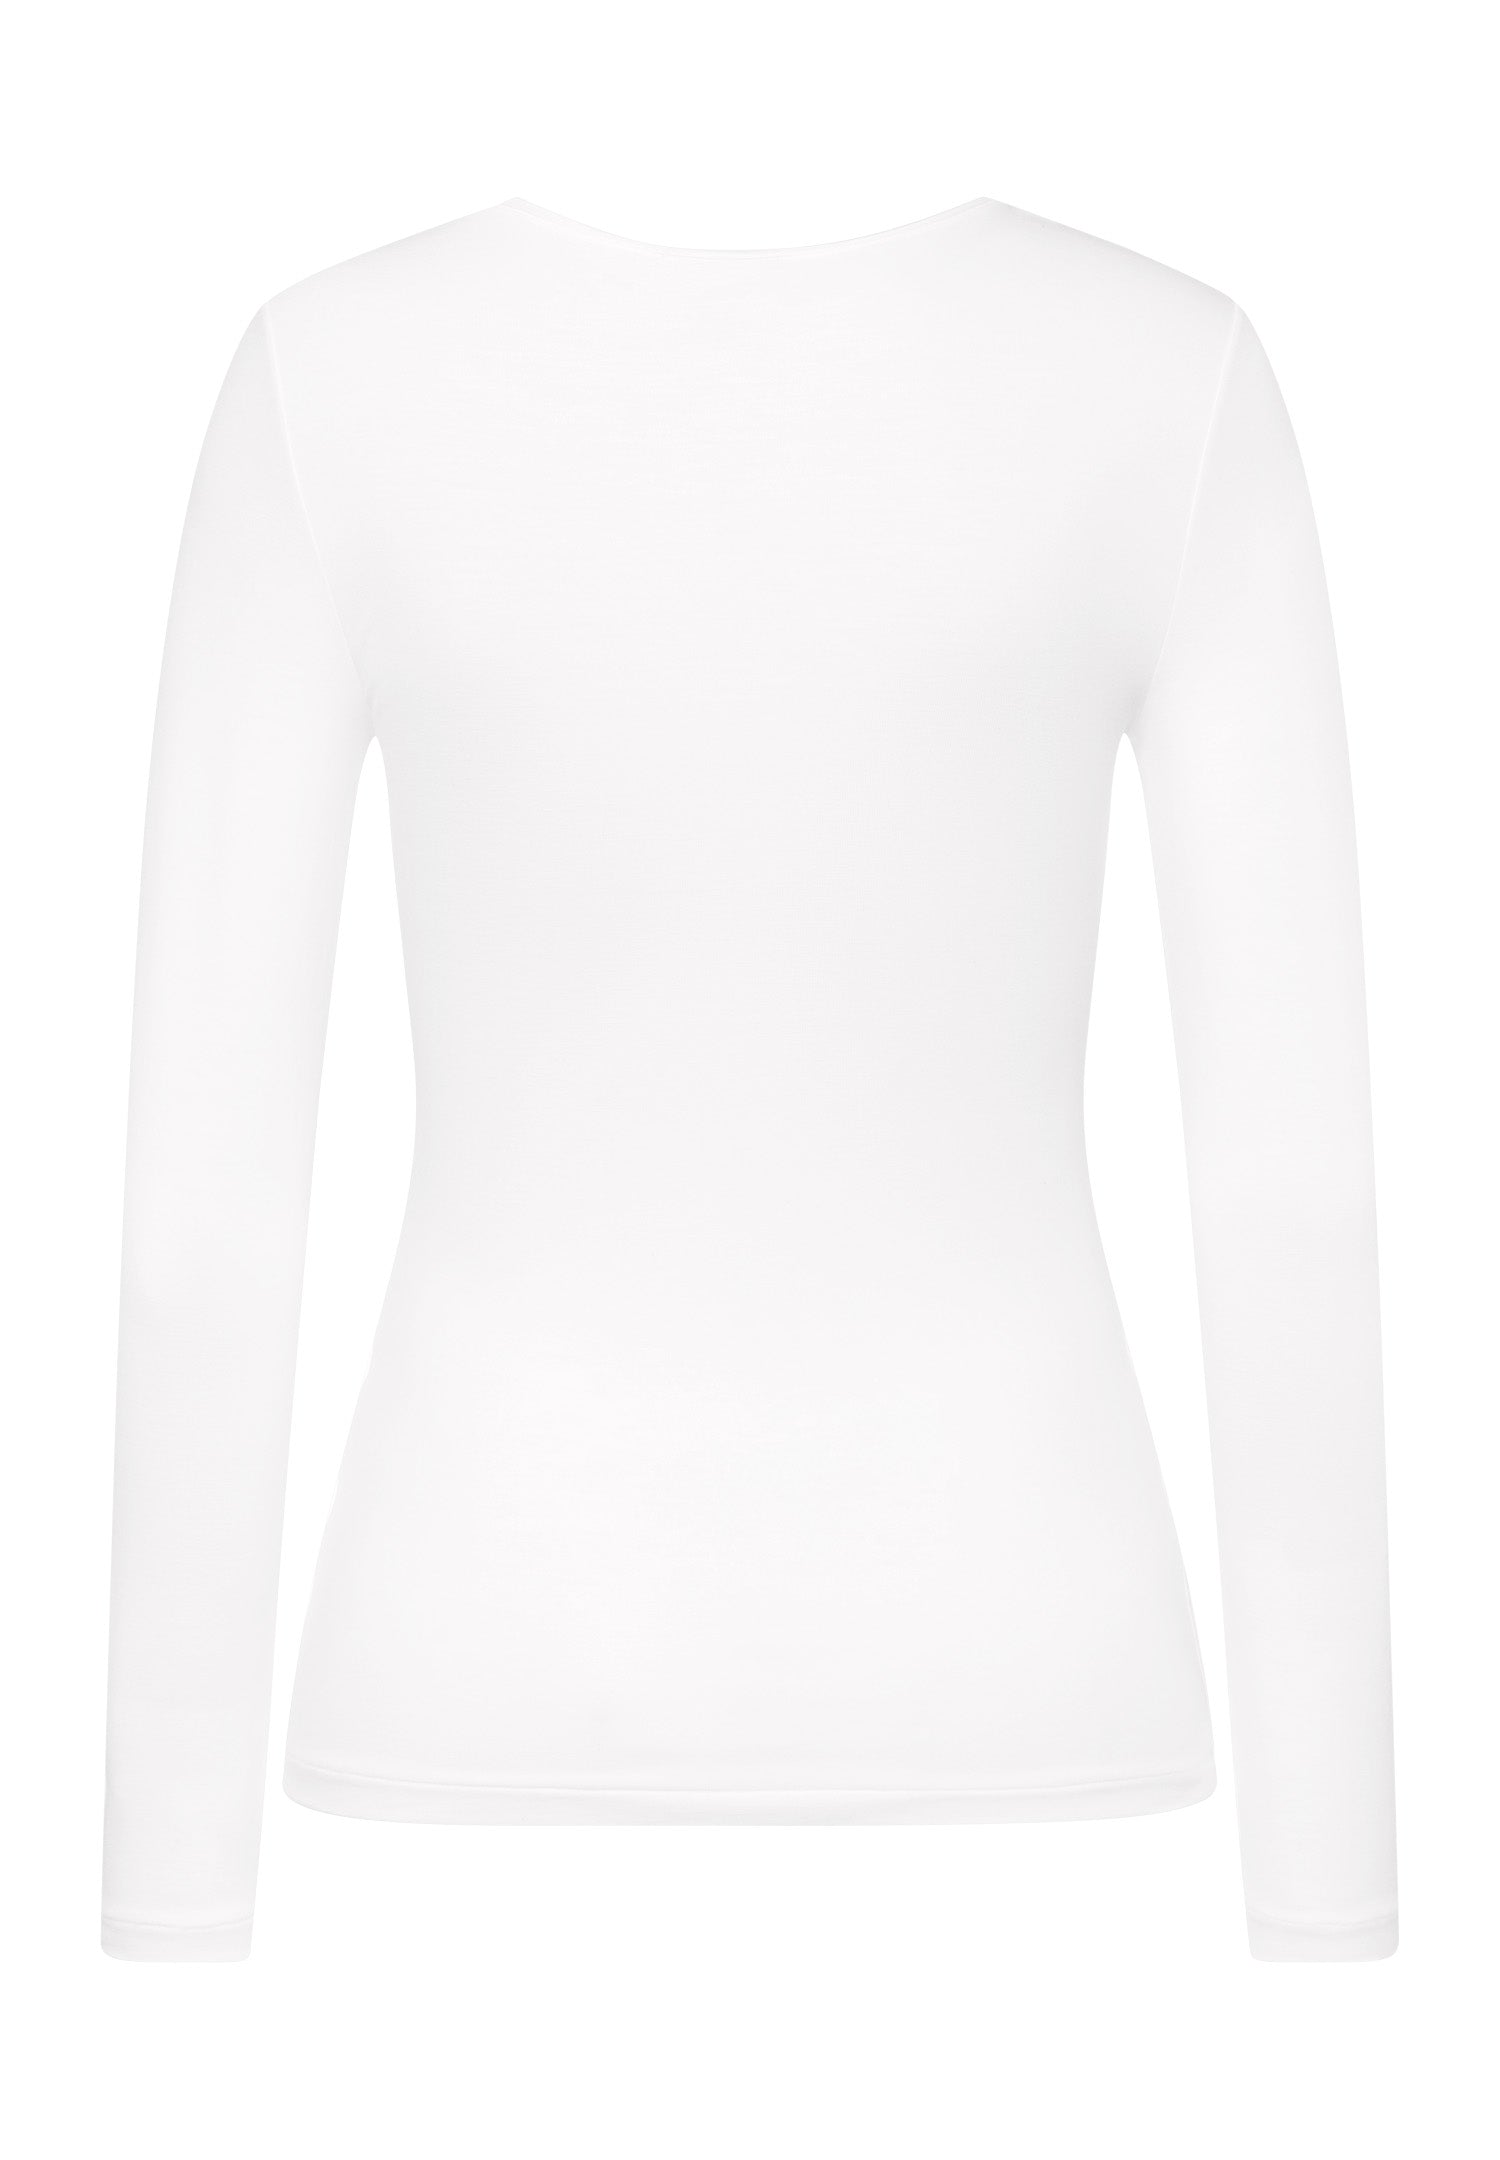 HANRO White Soft Touch Long Sleeve Shirt